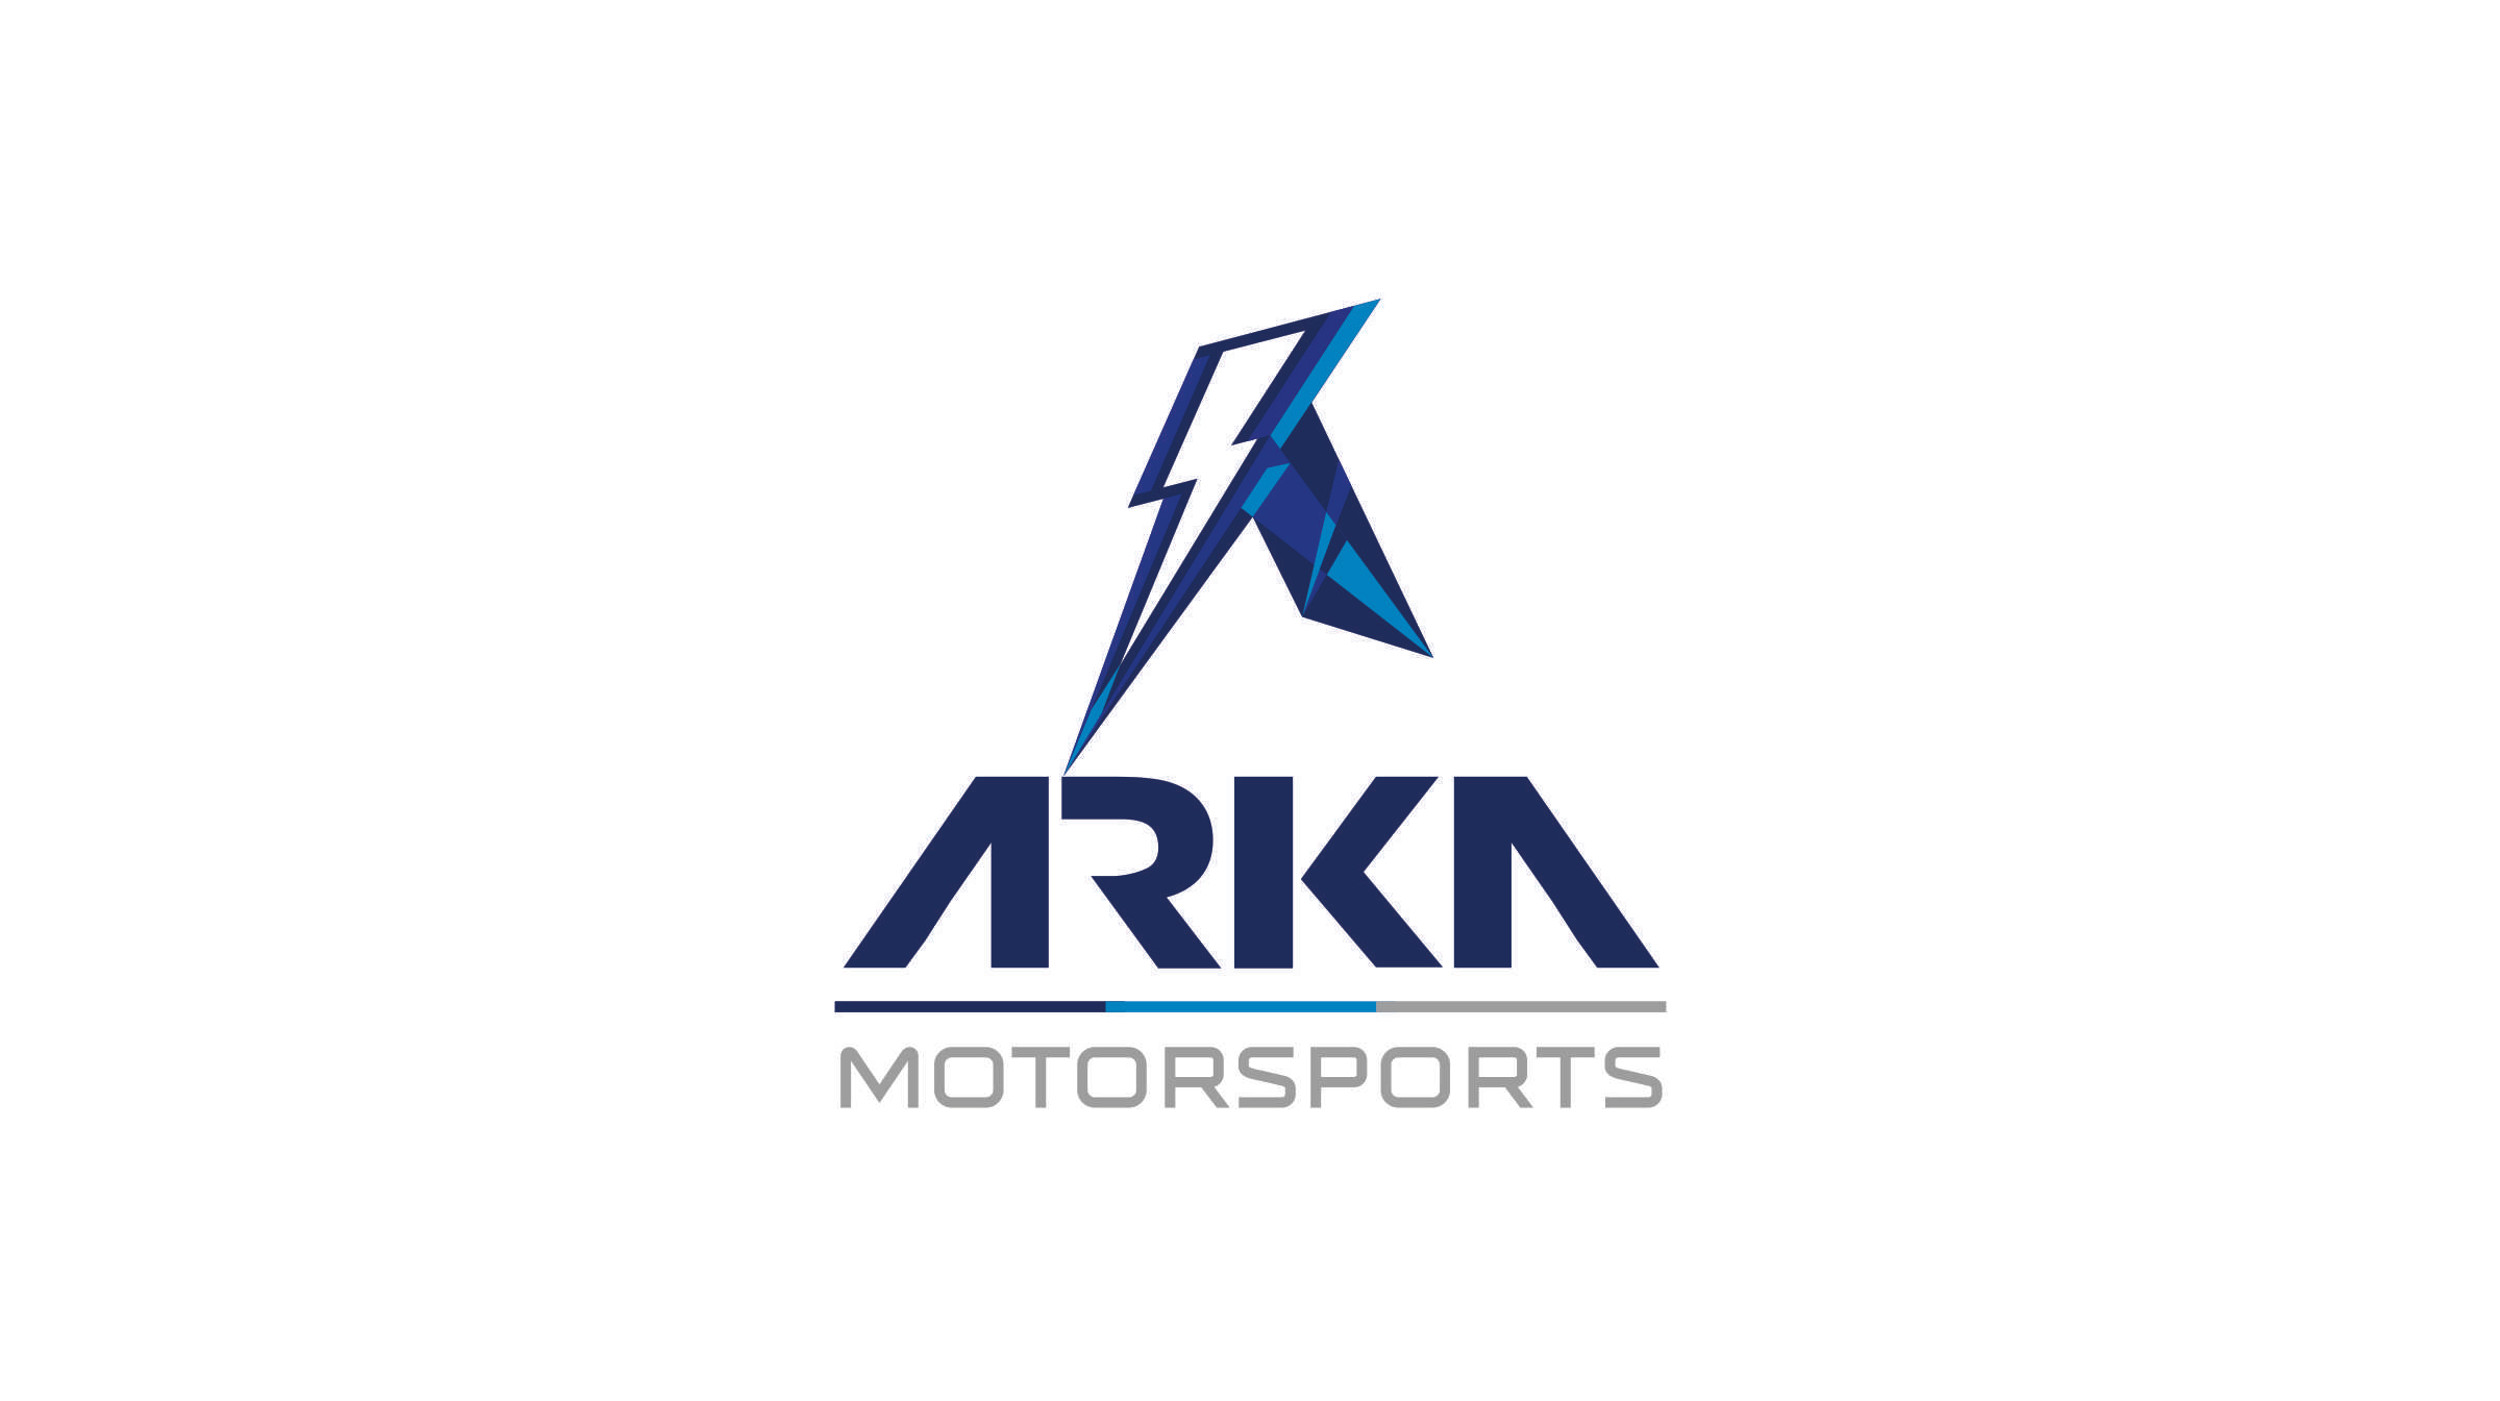 ARKA MOTORSPORTS